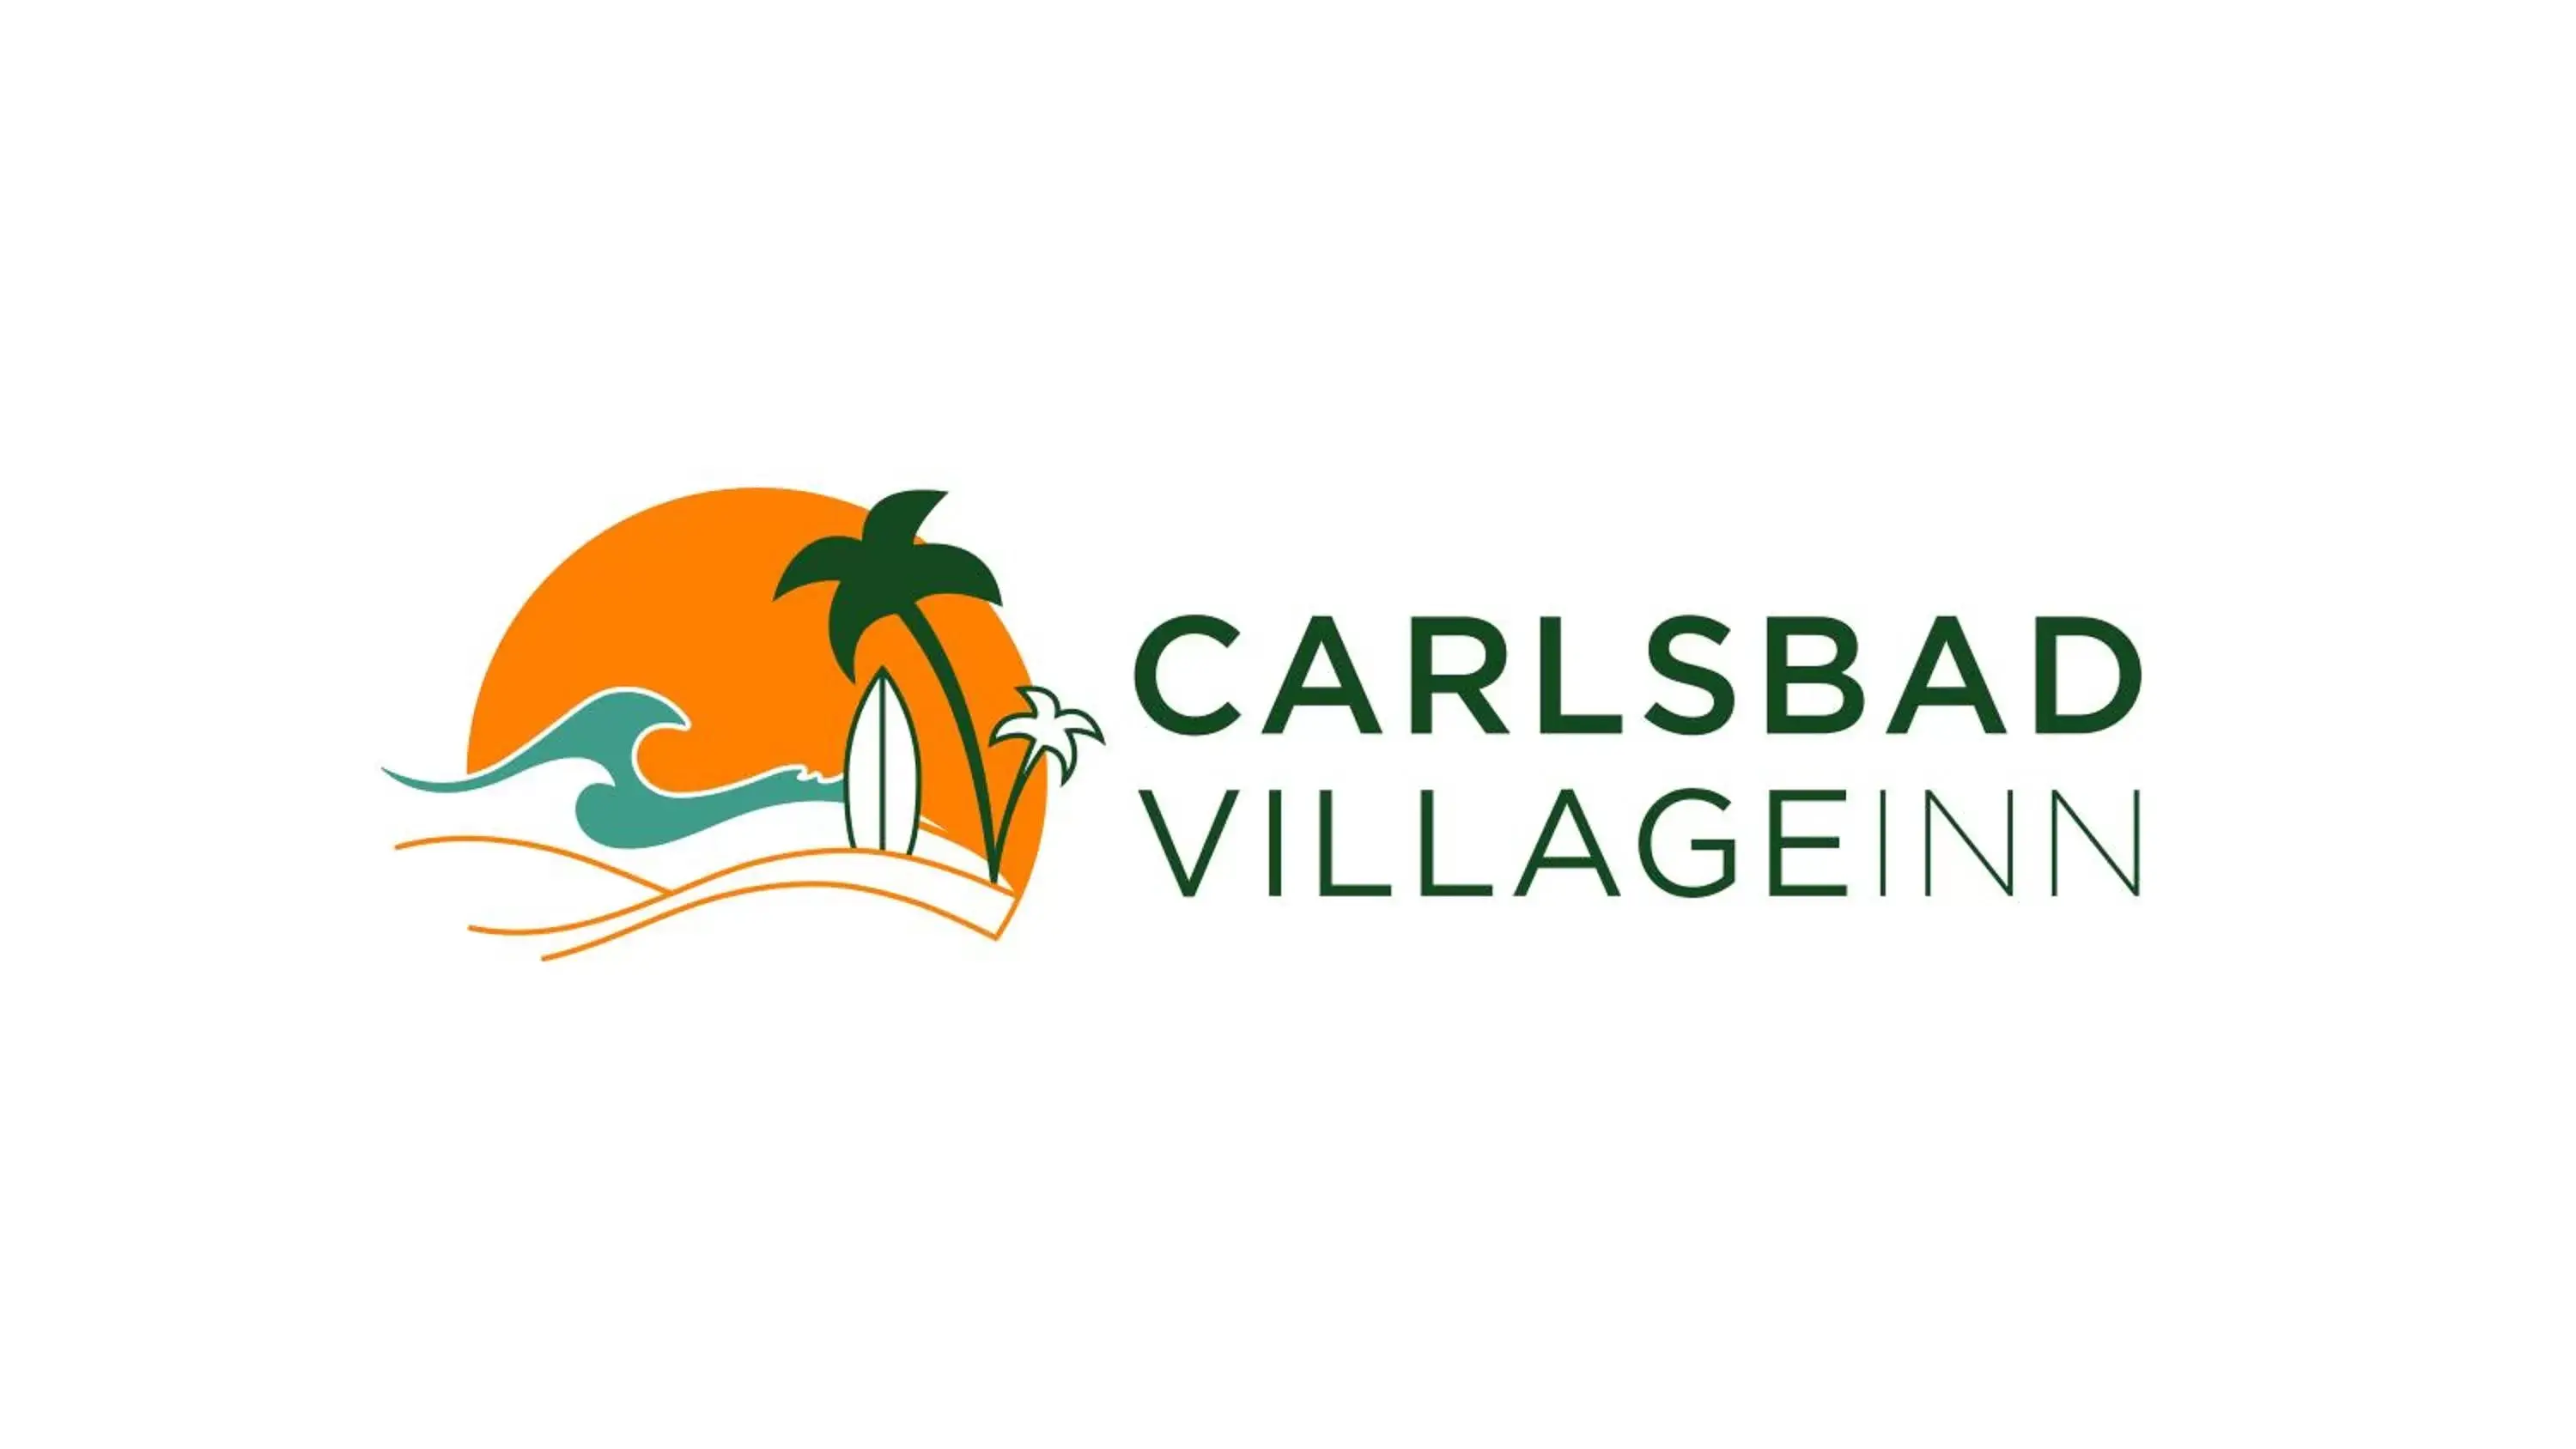 Property logo or sign, Property Logo/Sign in Carlsbad Village Inn